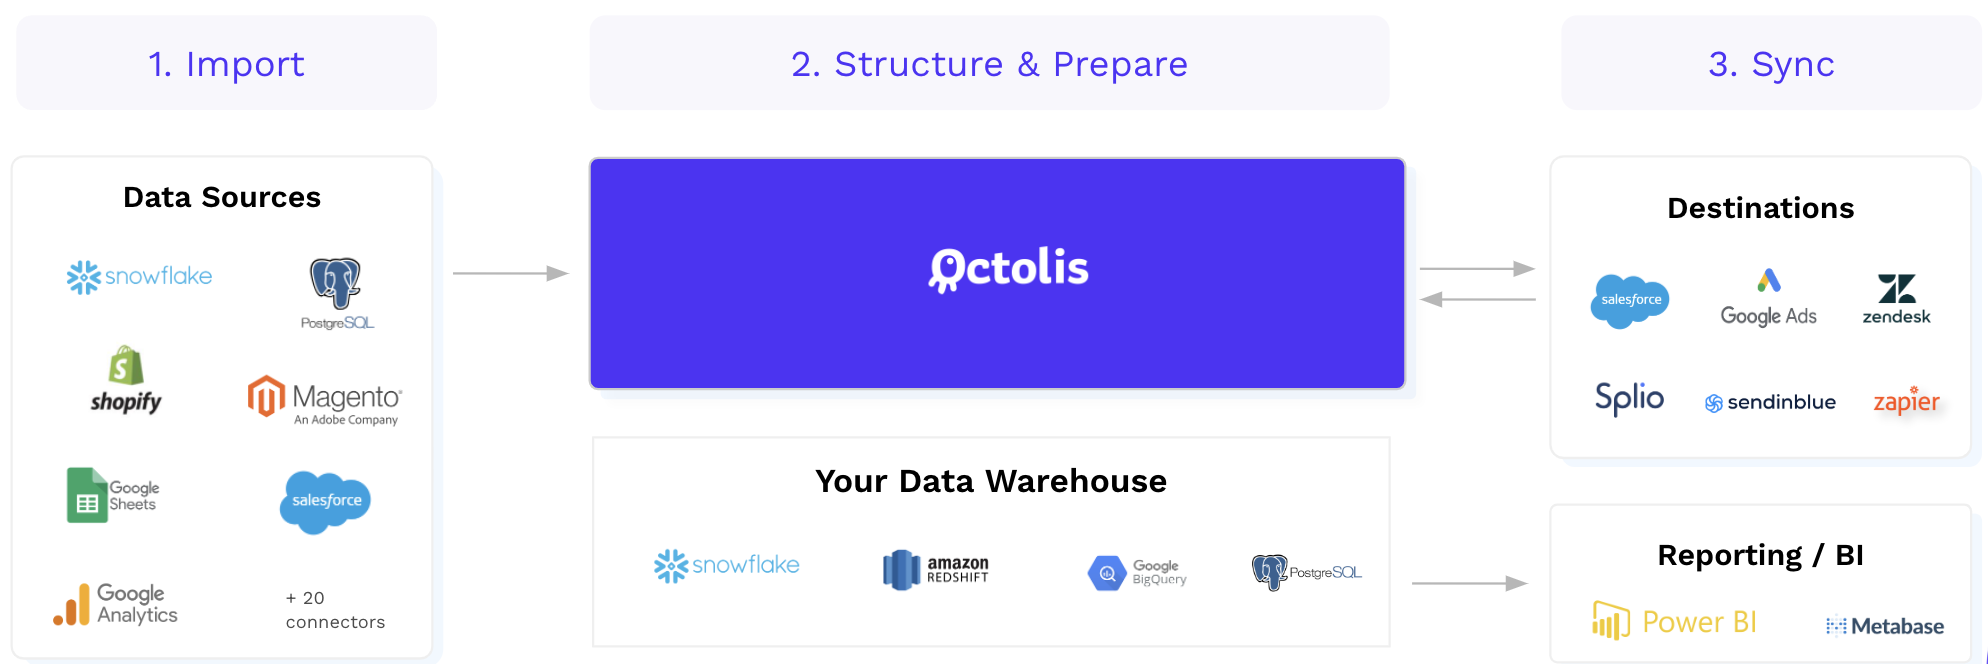 data analytics startups architecture data operations hub octolis